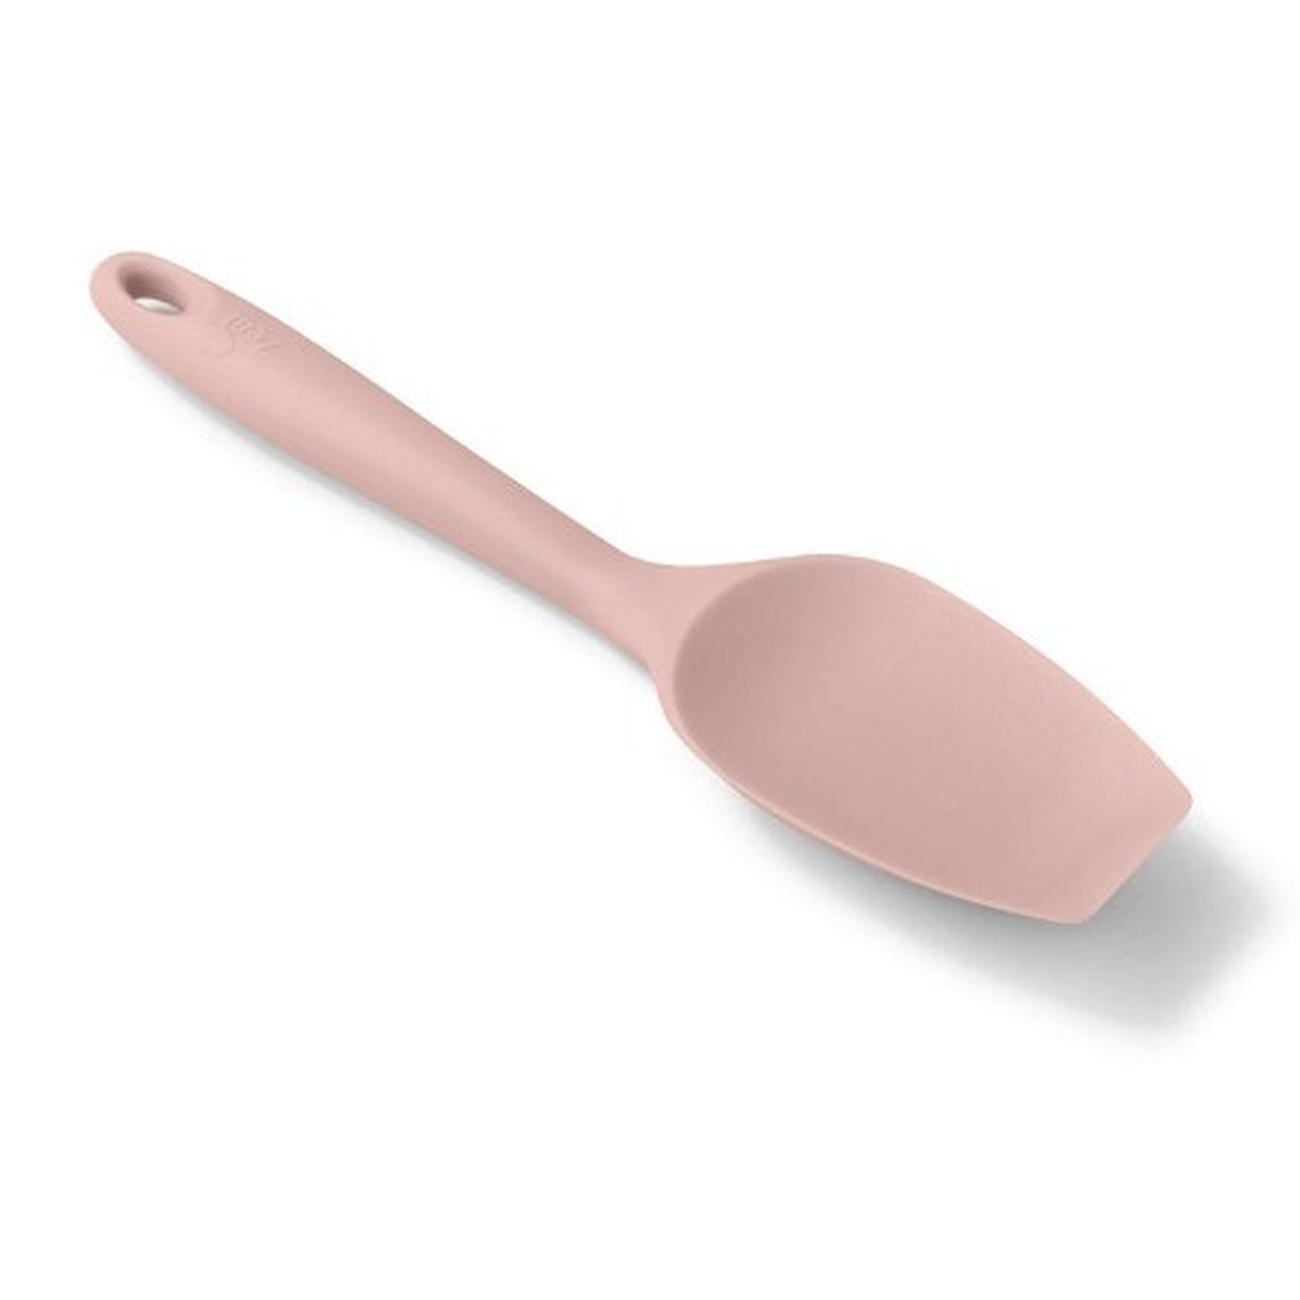 zea-spatula-spoon-rose-silicone-26cm - Zeal Silicone Spatula Spoon Provence Rose 26cm